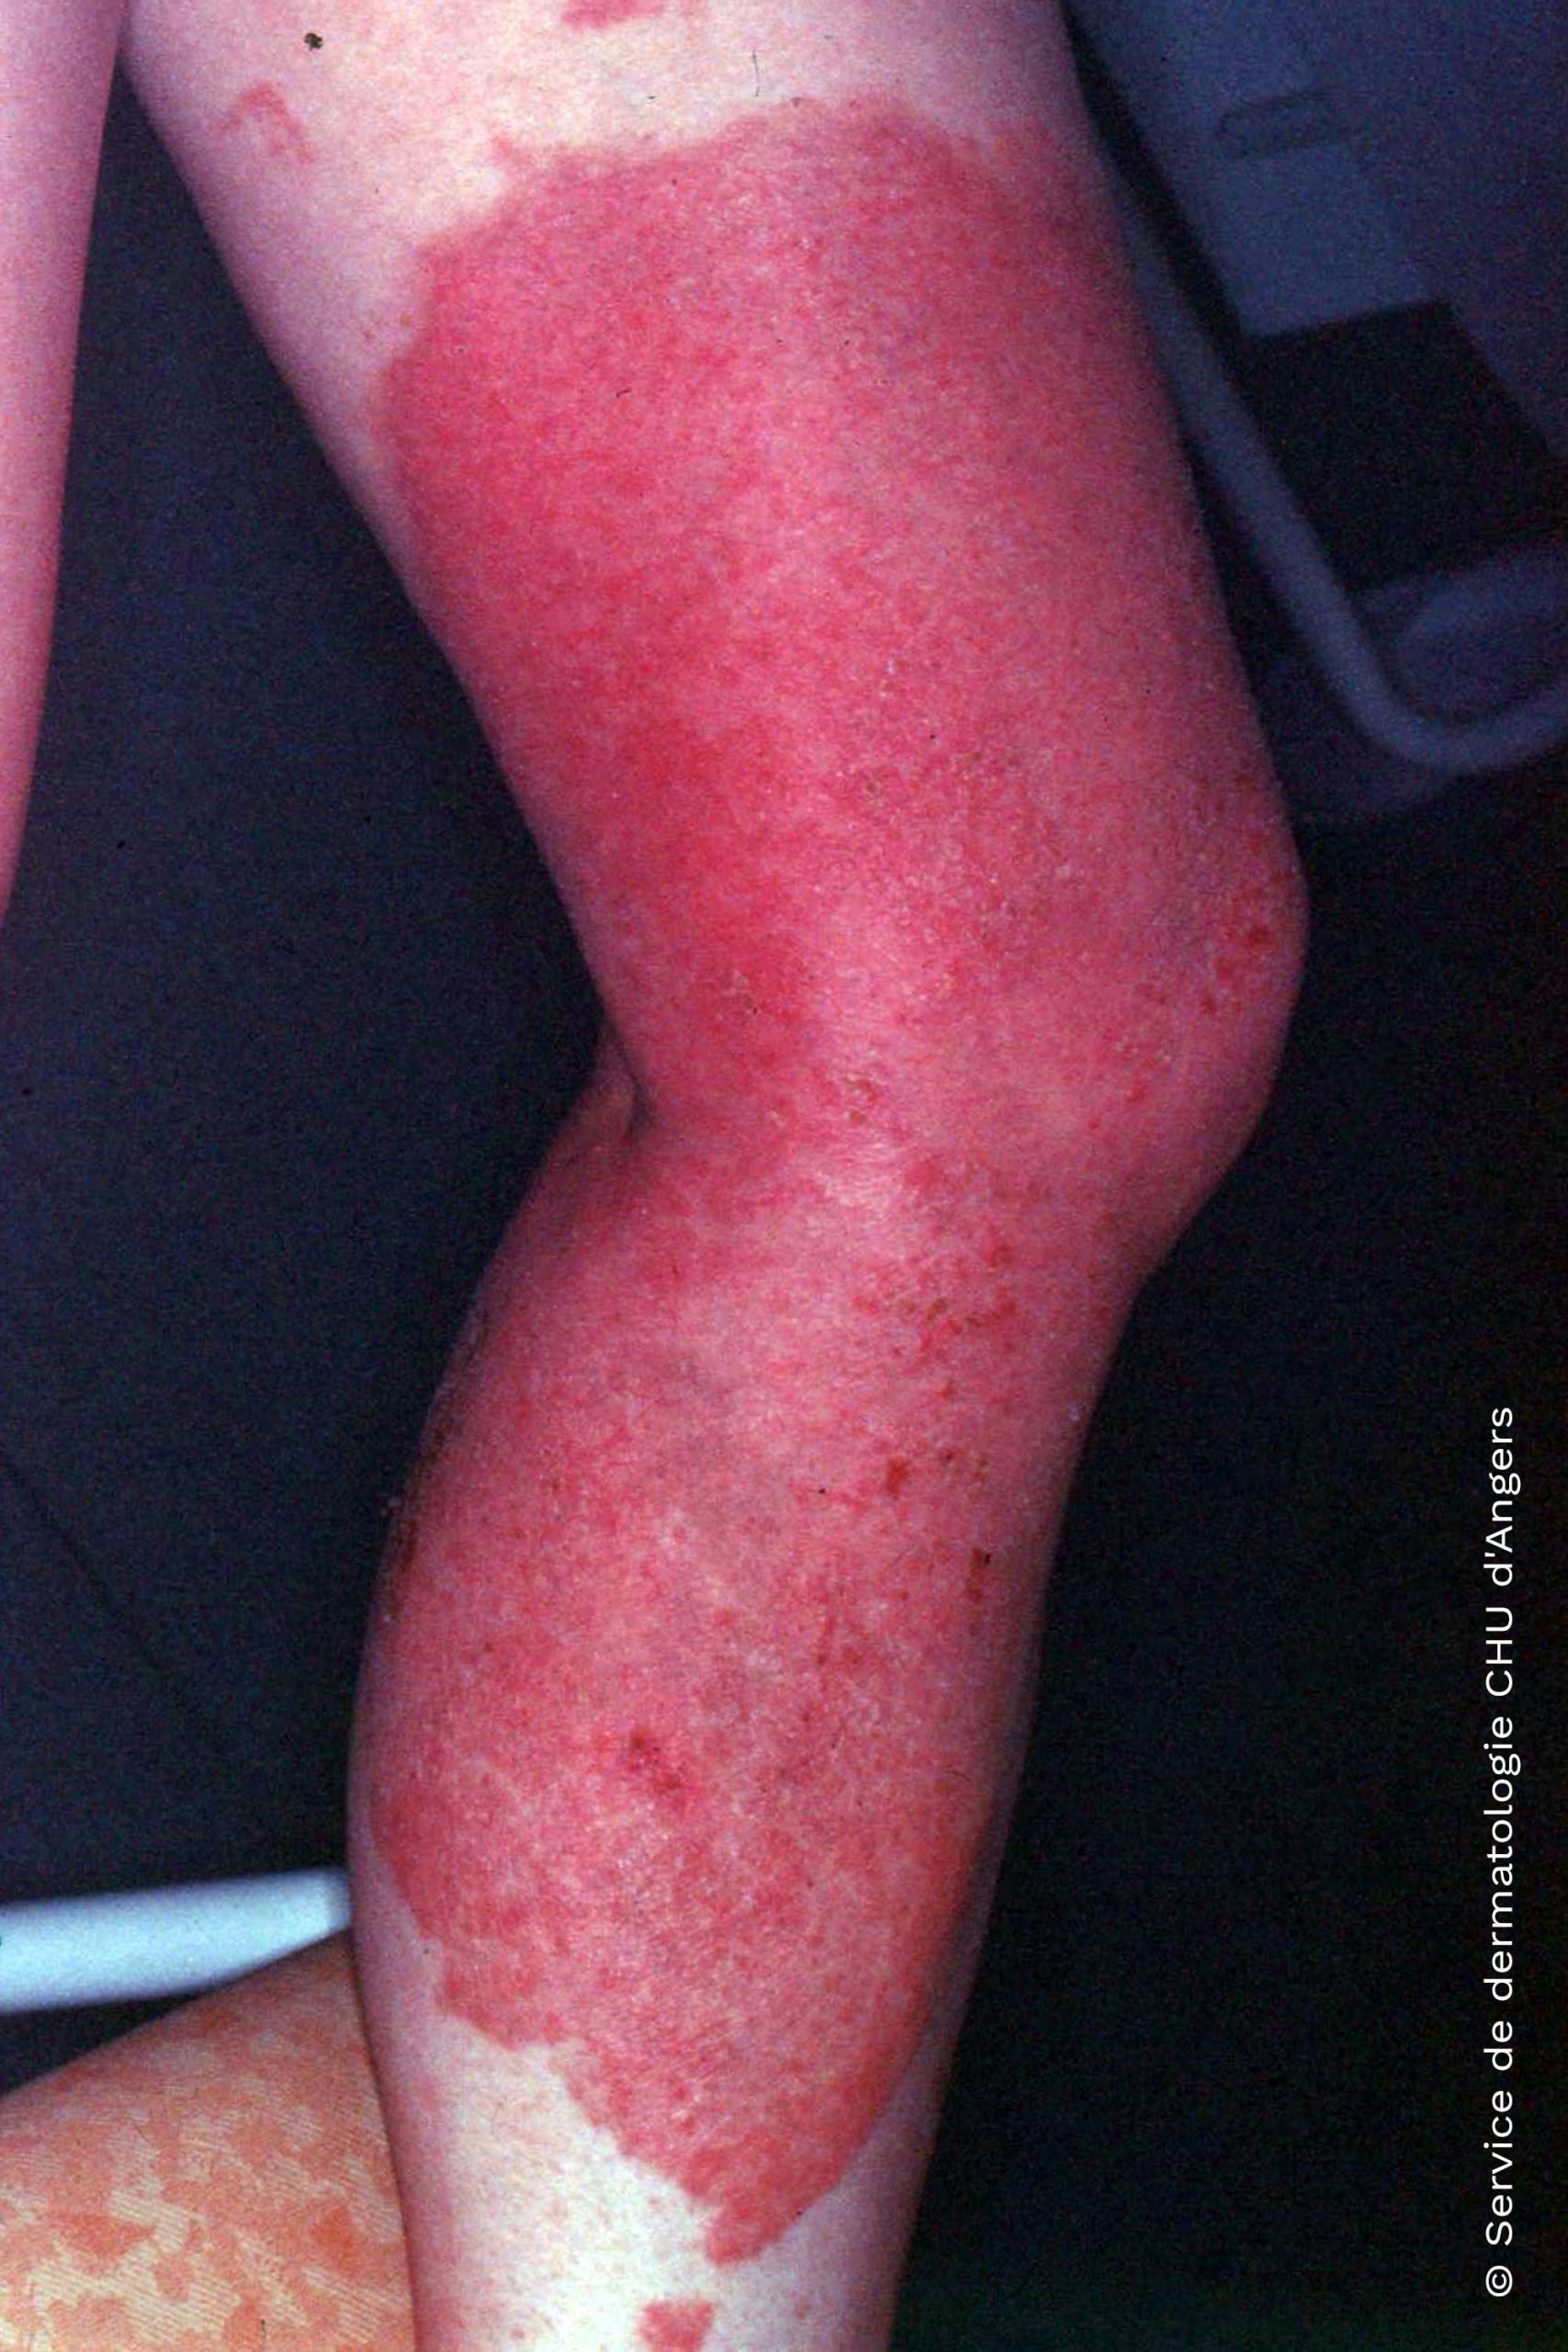 Eczema on the legs